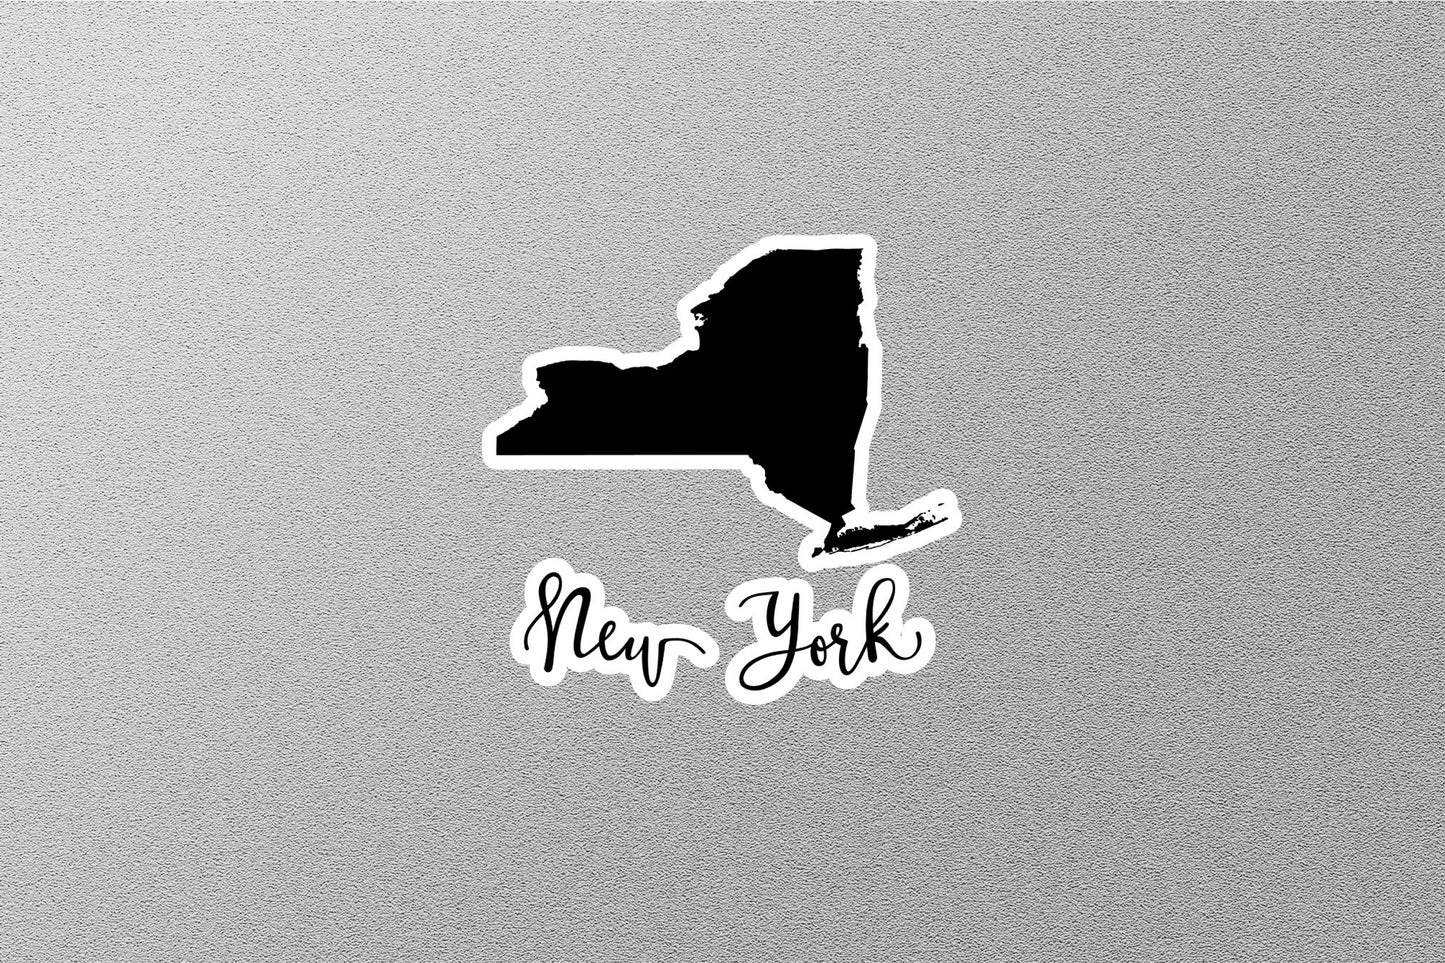 New York 1 State Sticker